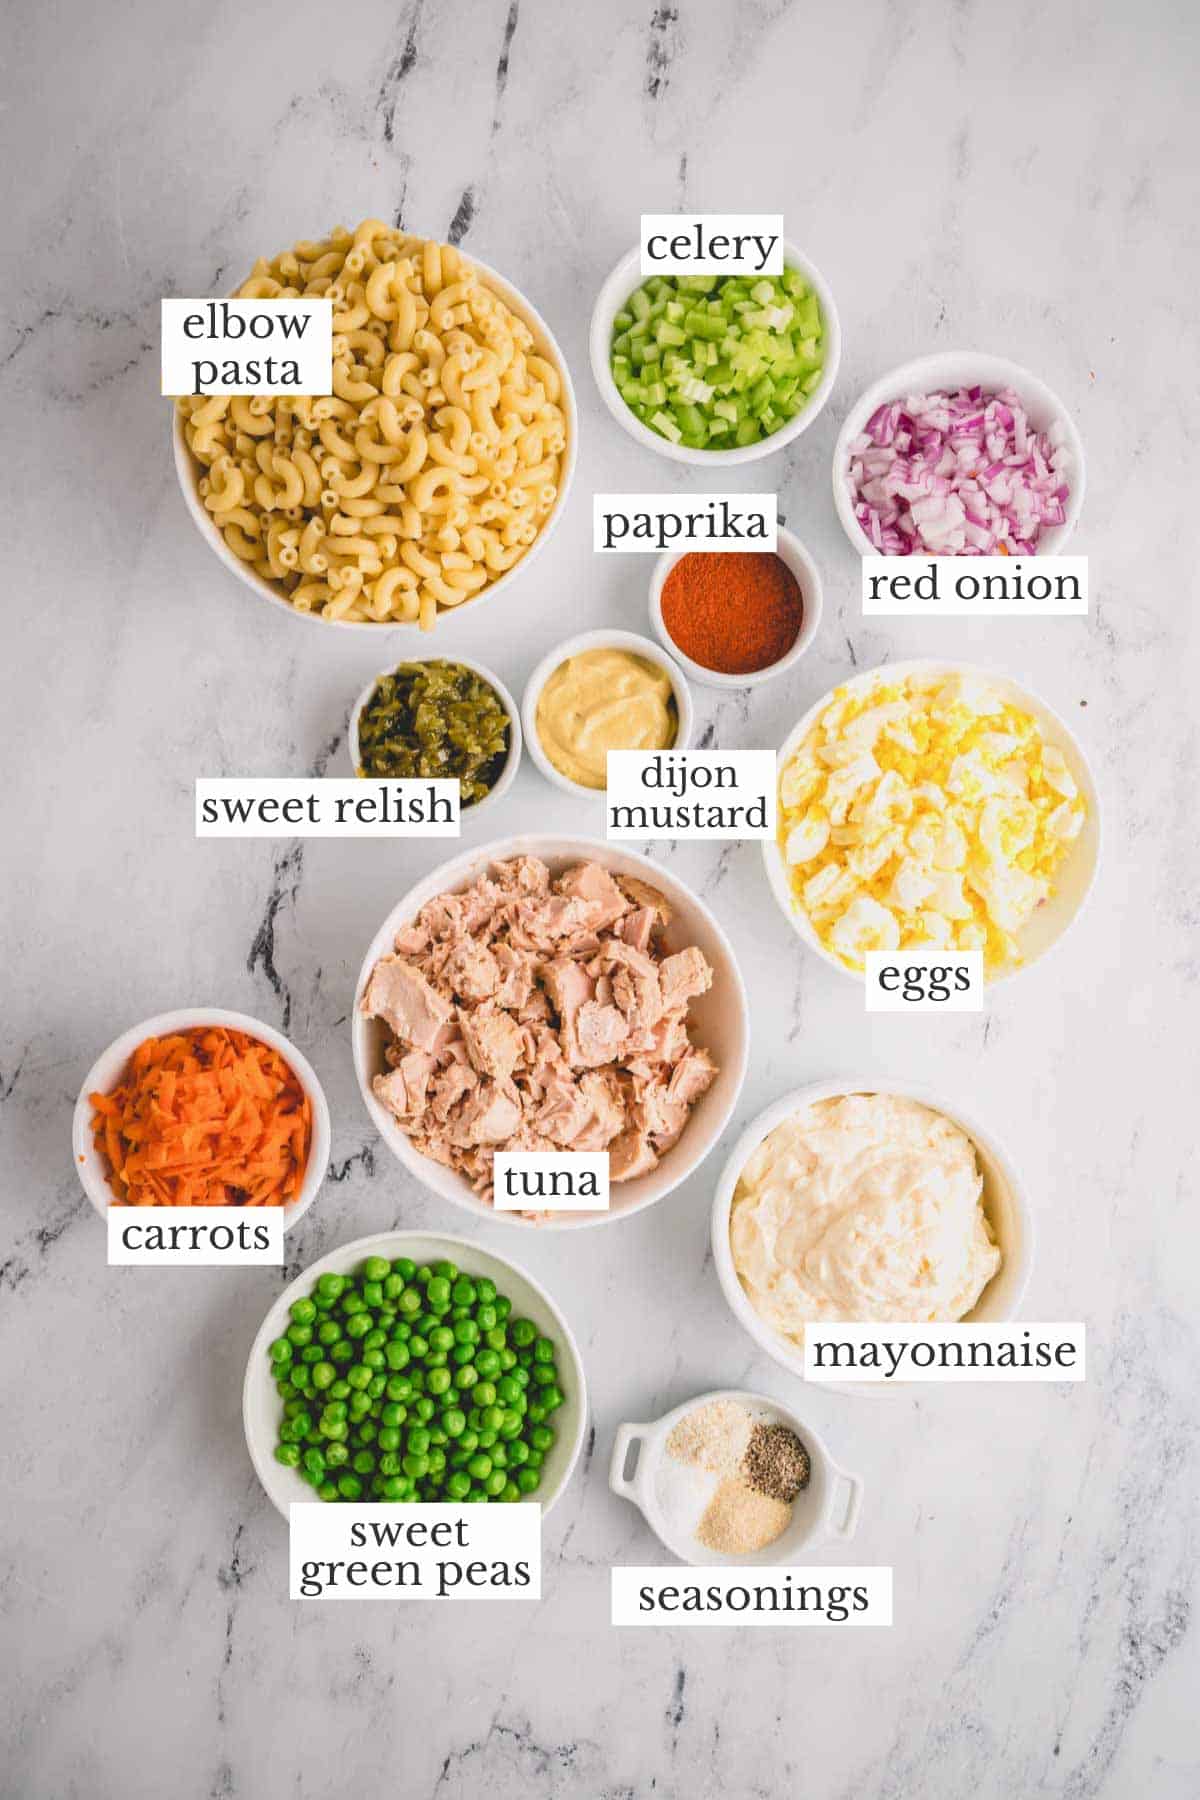 Bowls of ingredients needed to make tuna macaroni salad.